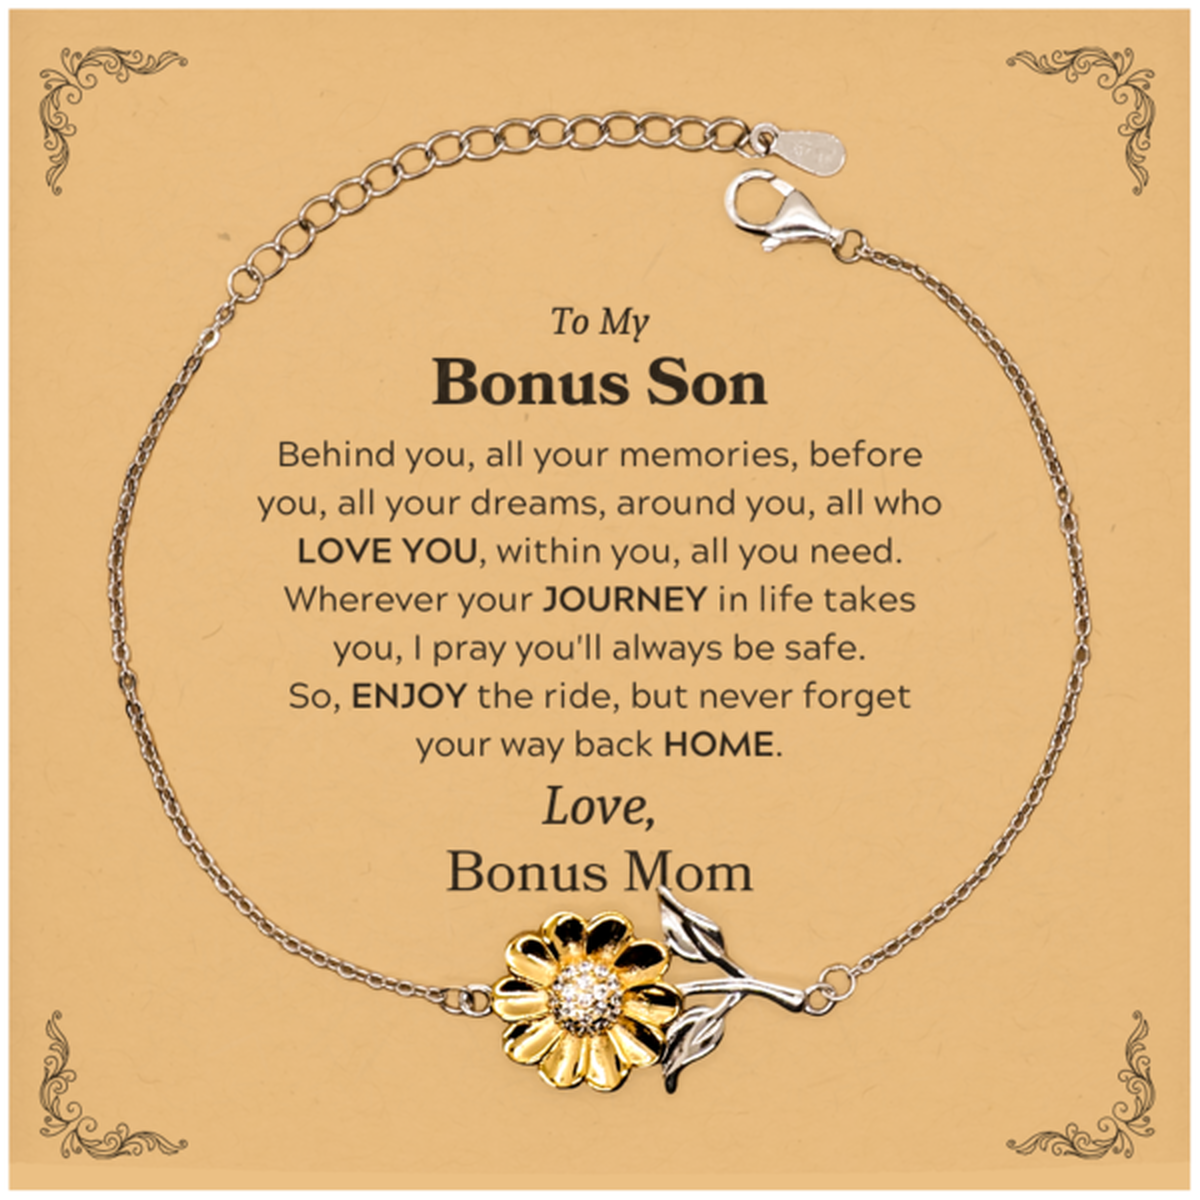 To My Bonus Son Graduation Gifts from Bonus Mom, Bonus Son Sunflower Bracelet Christmas Birthday Gifts for Bonus Son Behind you, all your memories, before you, all your dreams. Love, Bonus Mom